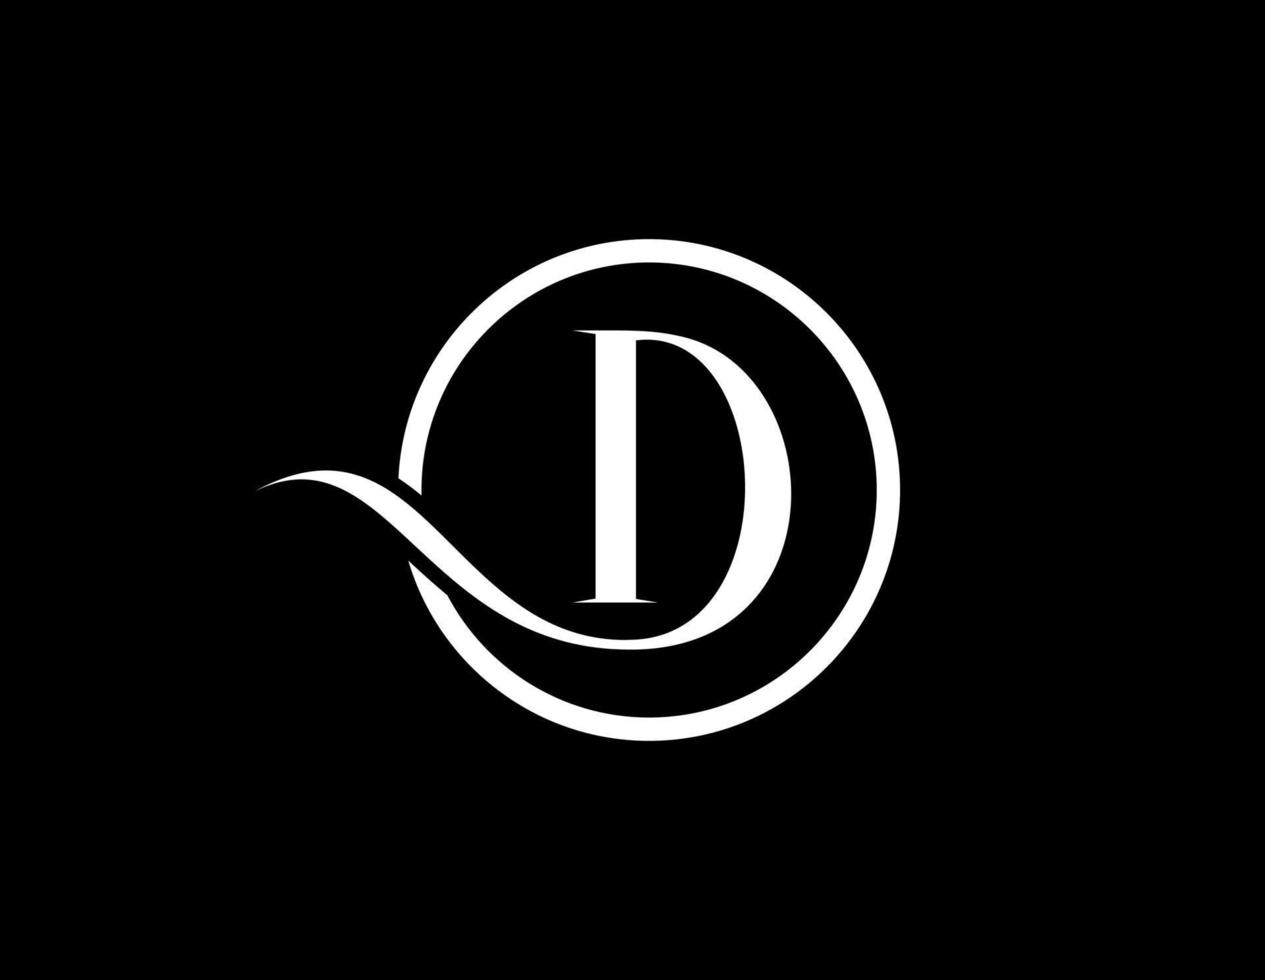 Letter D circle logo design, vector